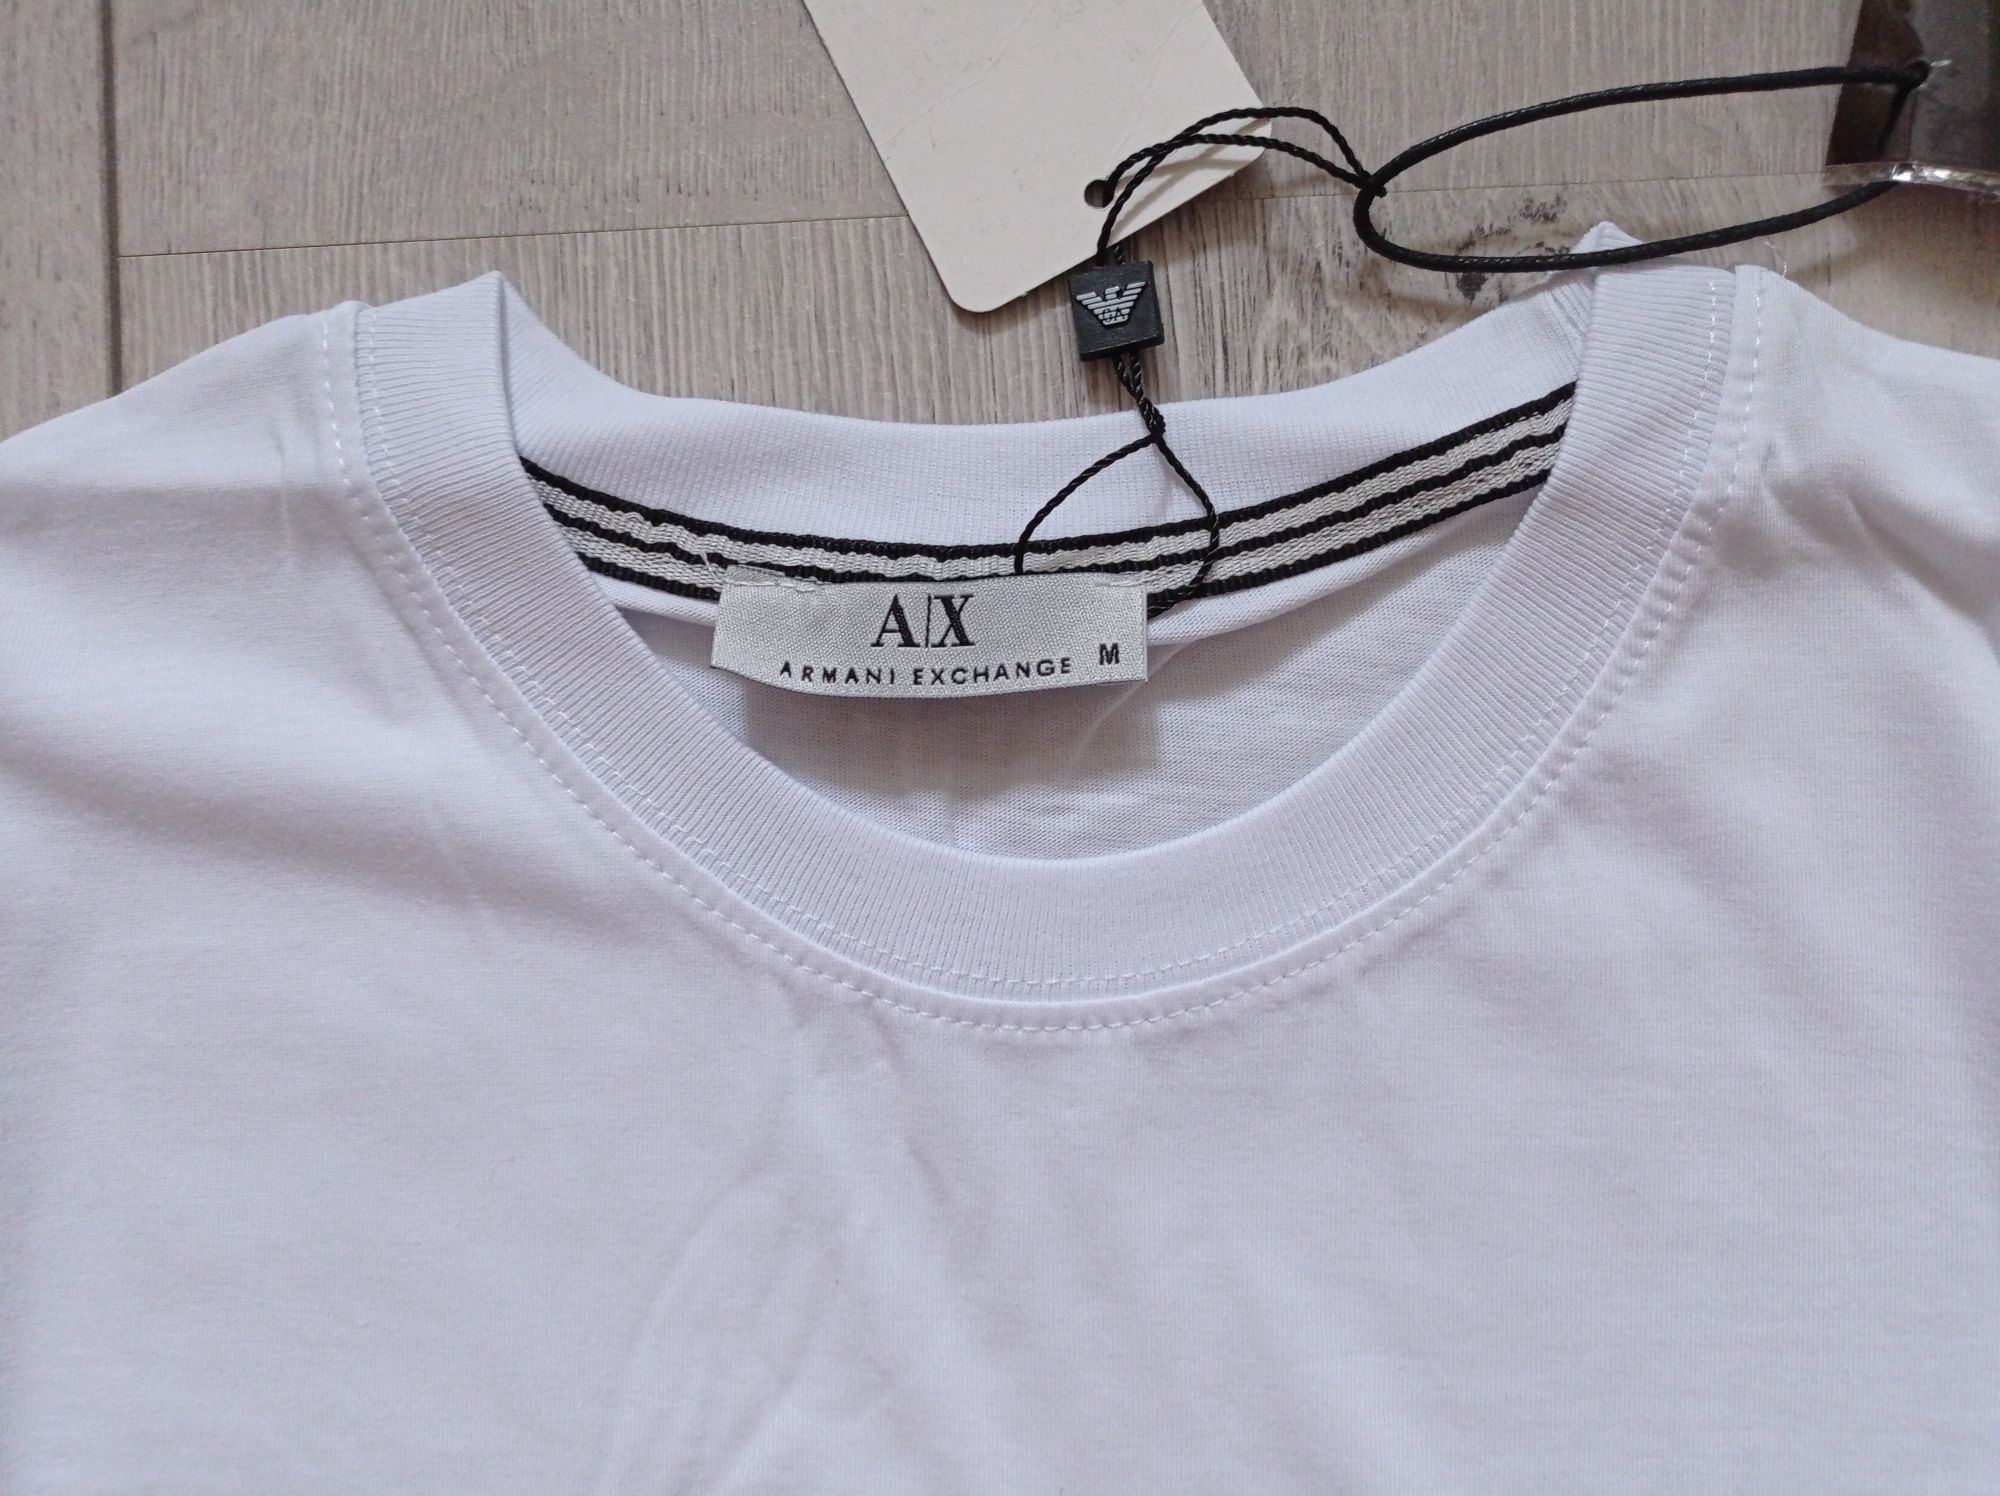 Koszulka t-shirt Armani exchange rozmiar M nowa metki